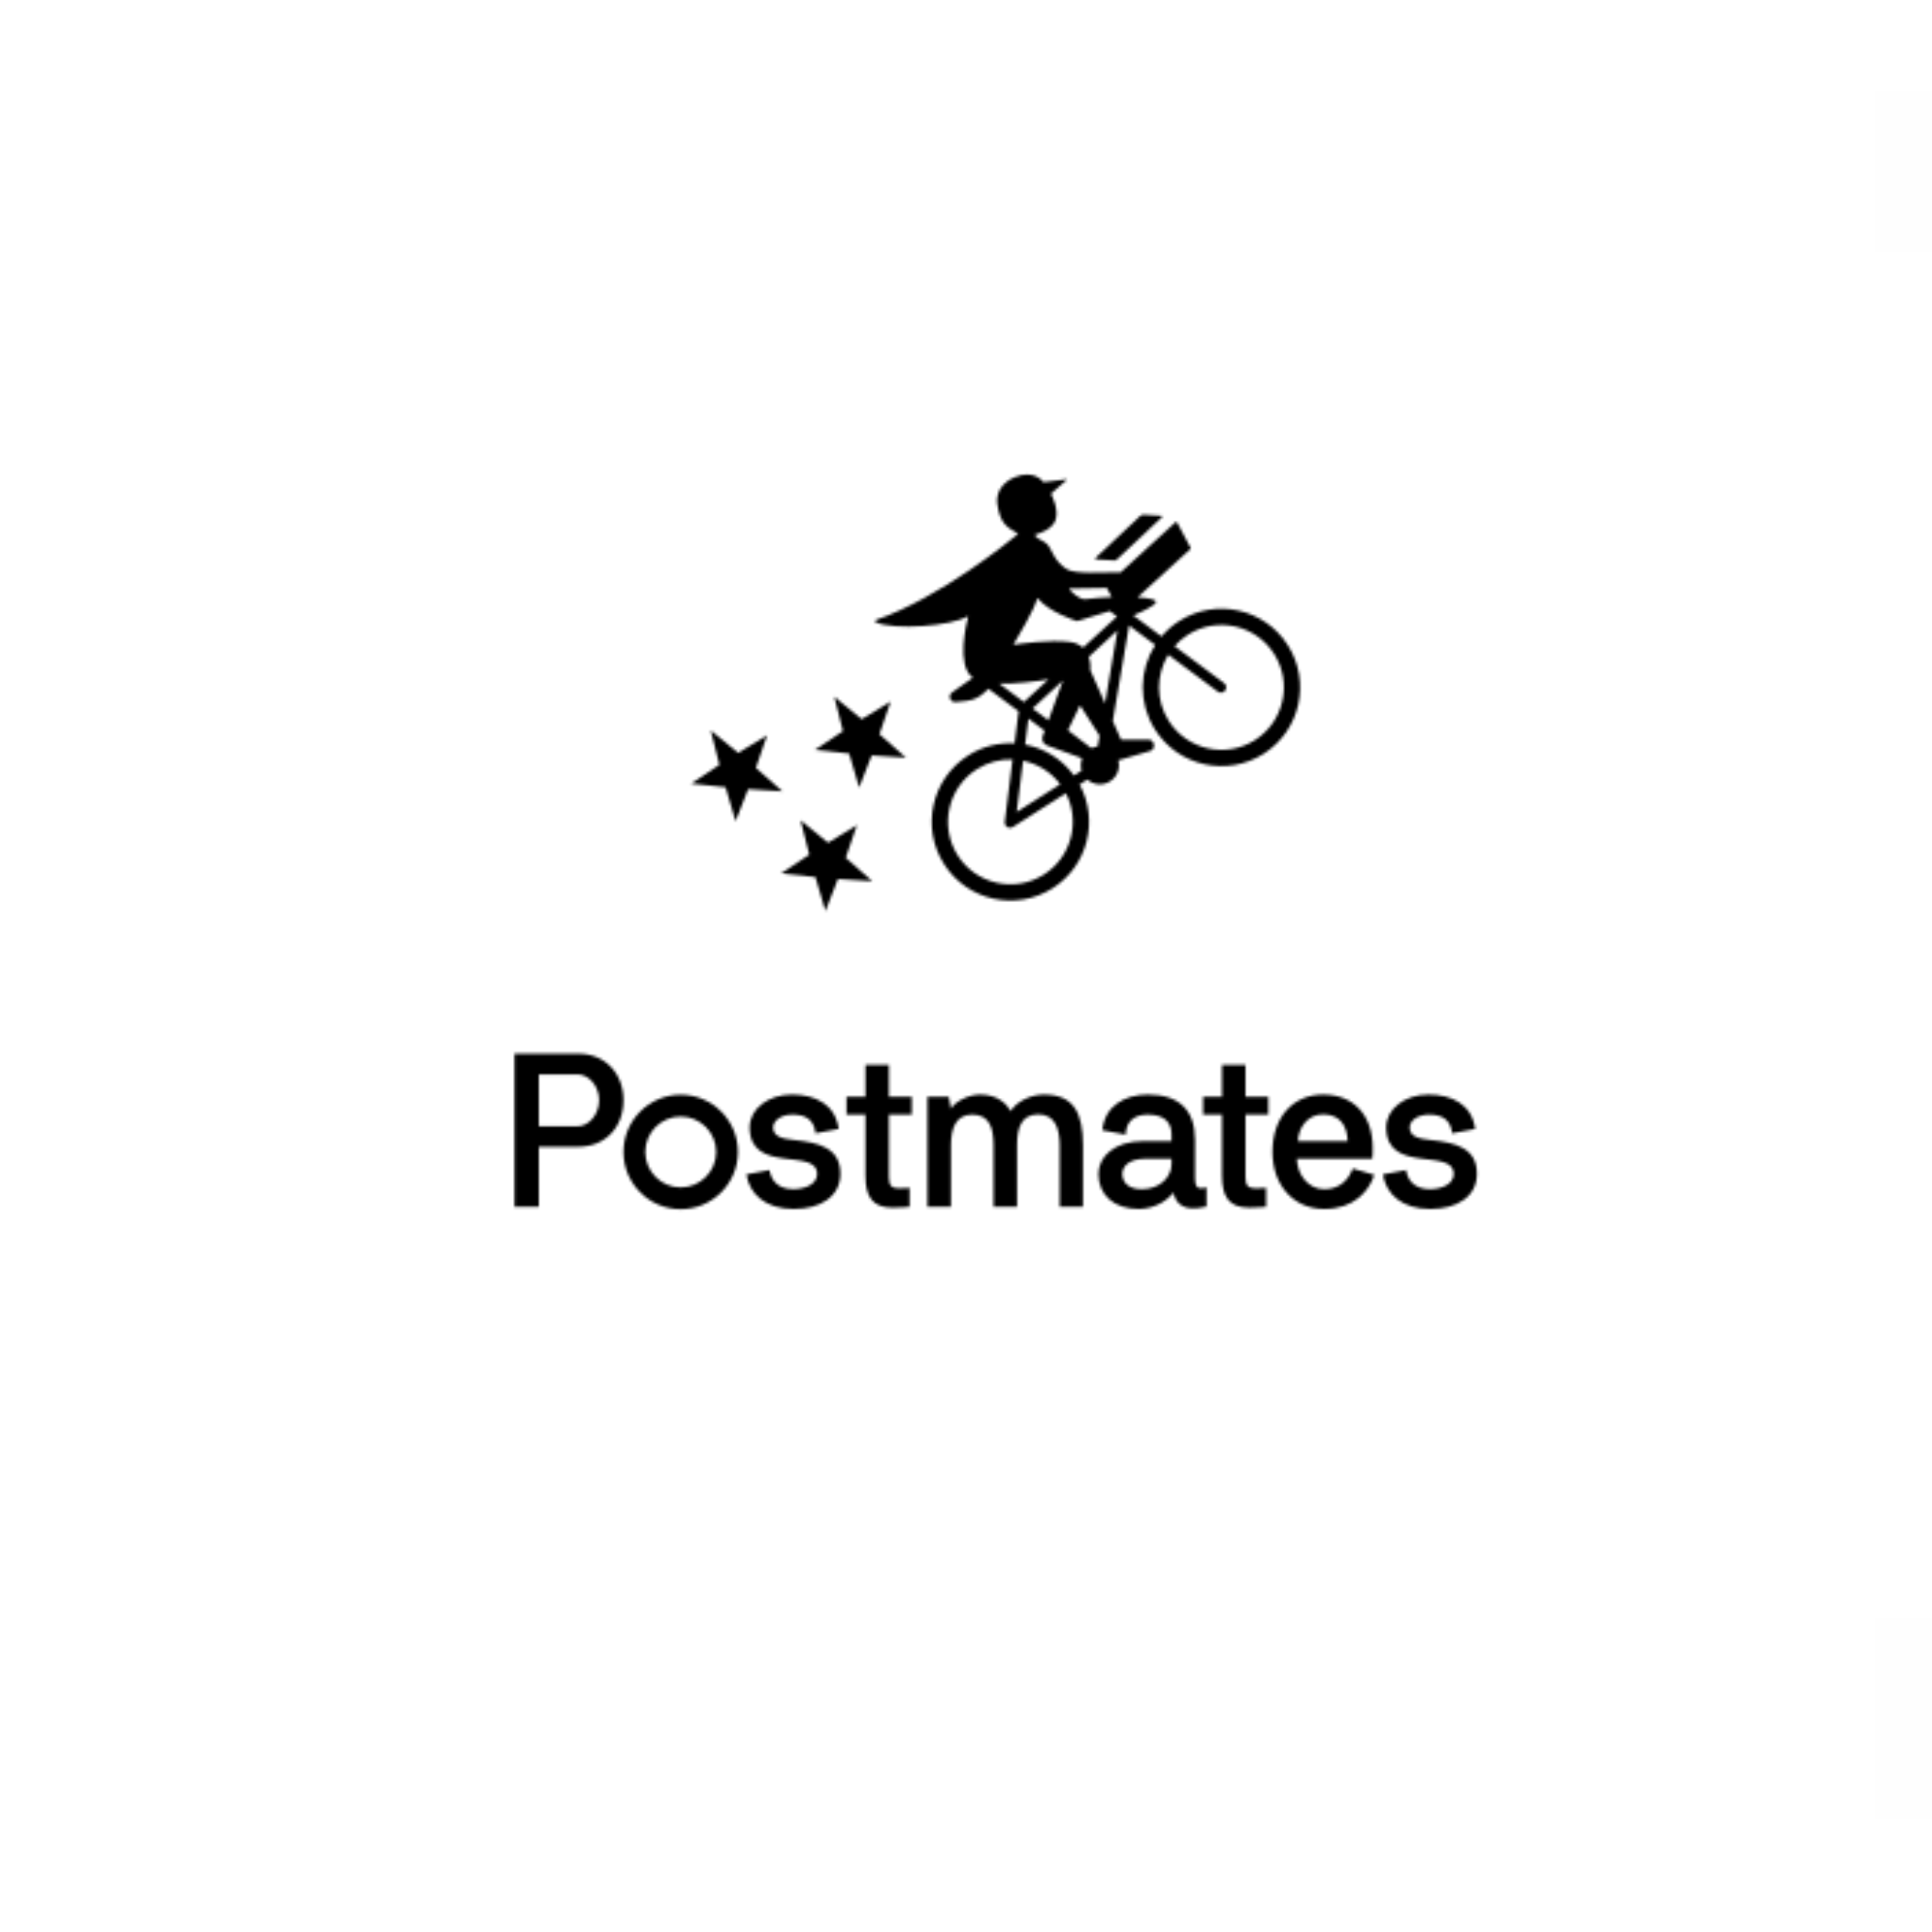 Get $20 Off Your Next Postmates Order